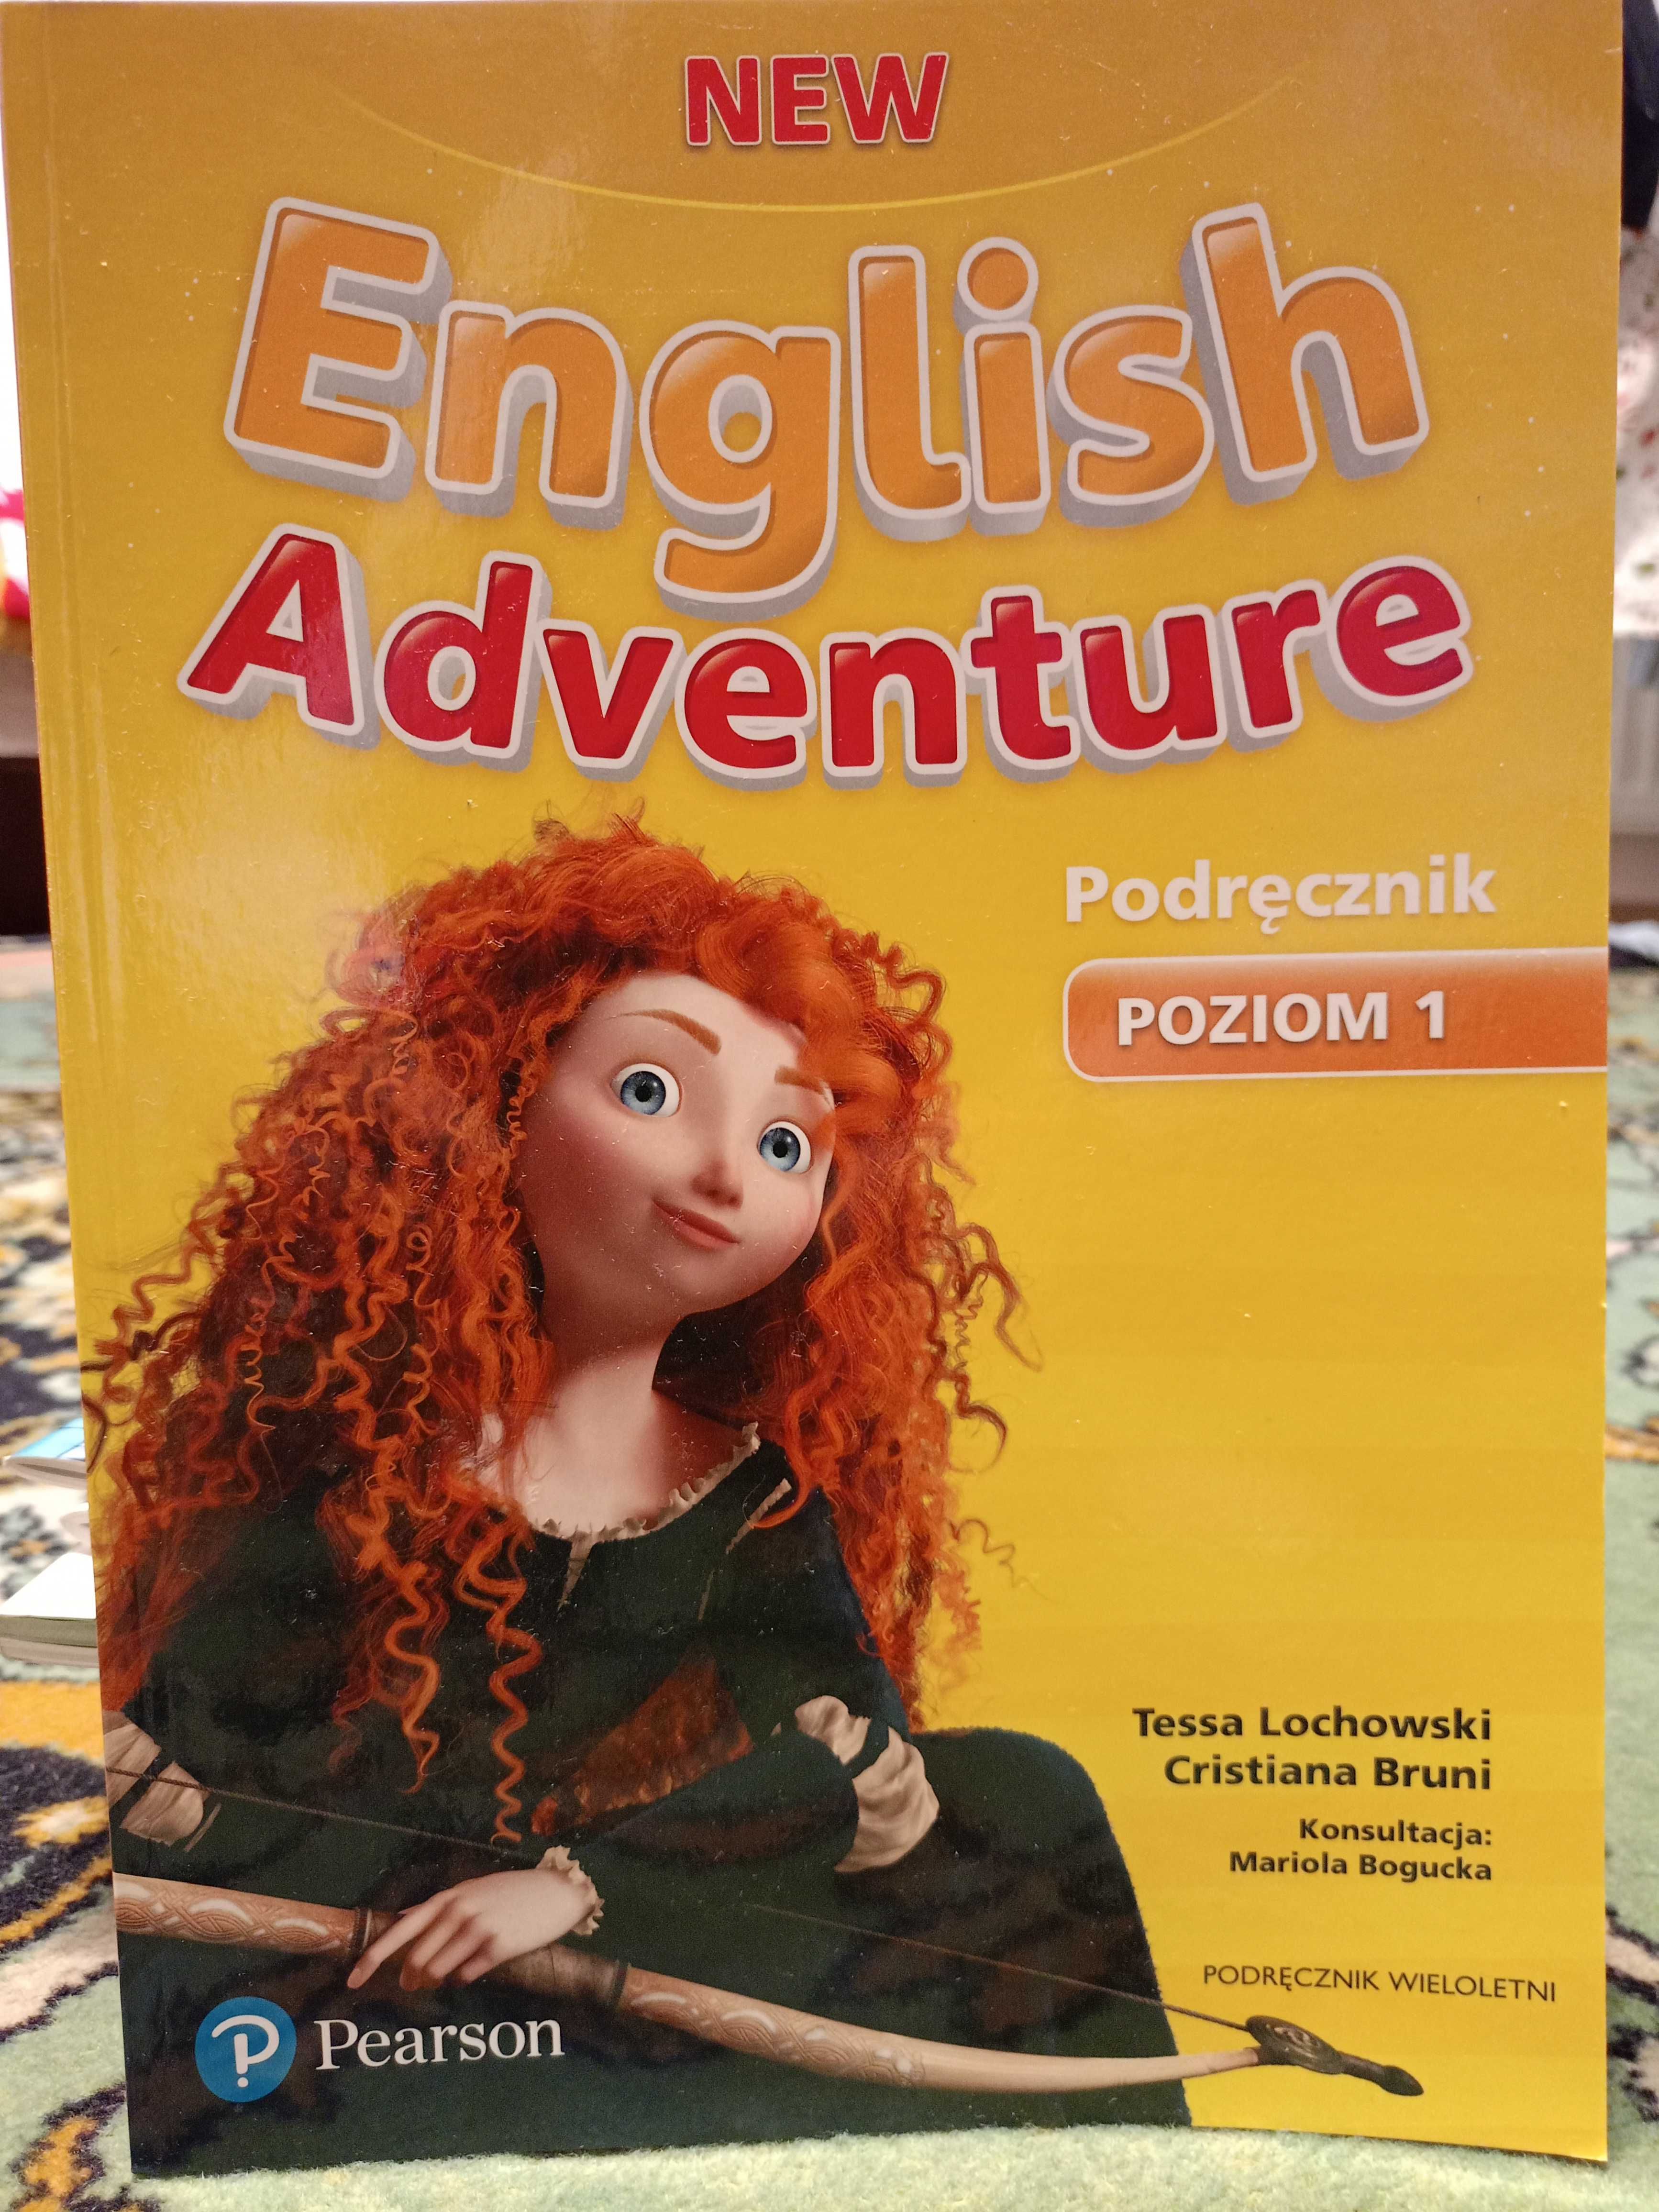 New English Adventure kl 1 podręcznik